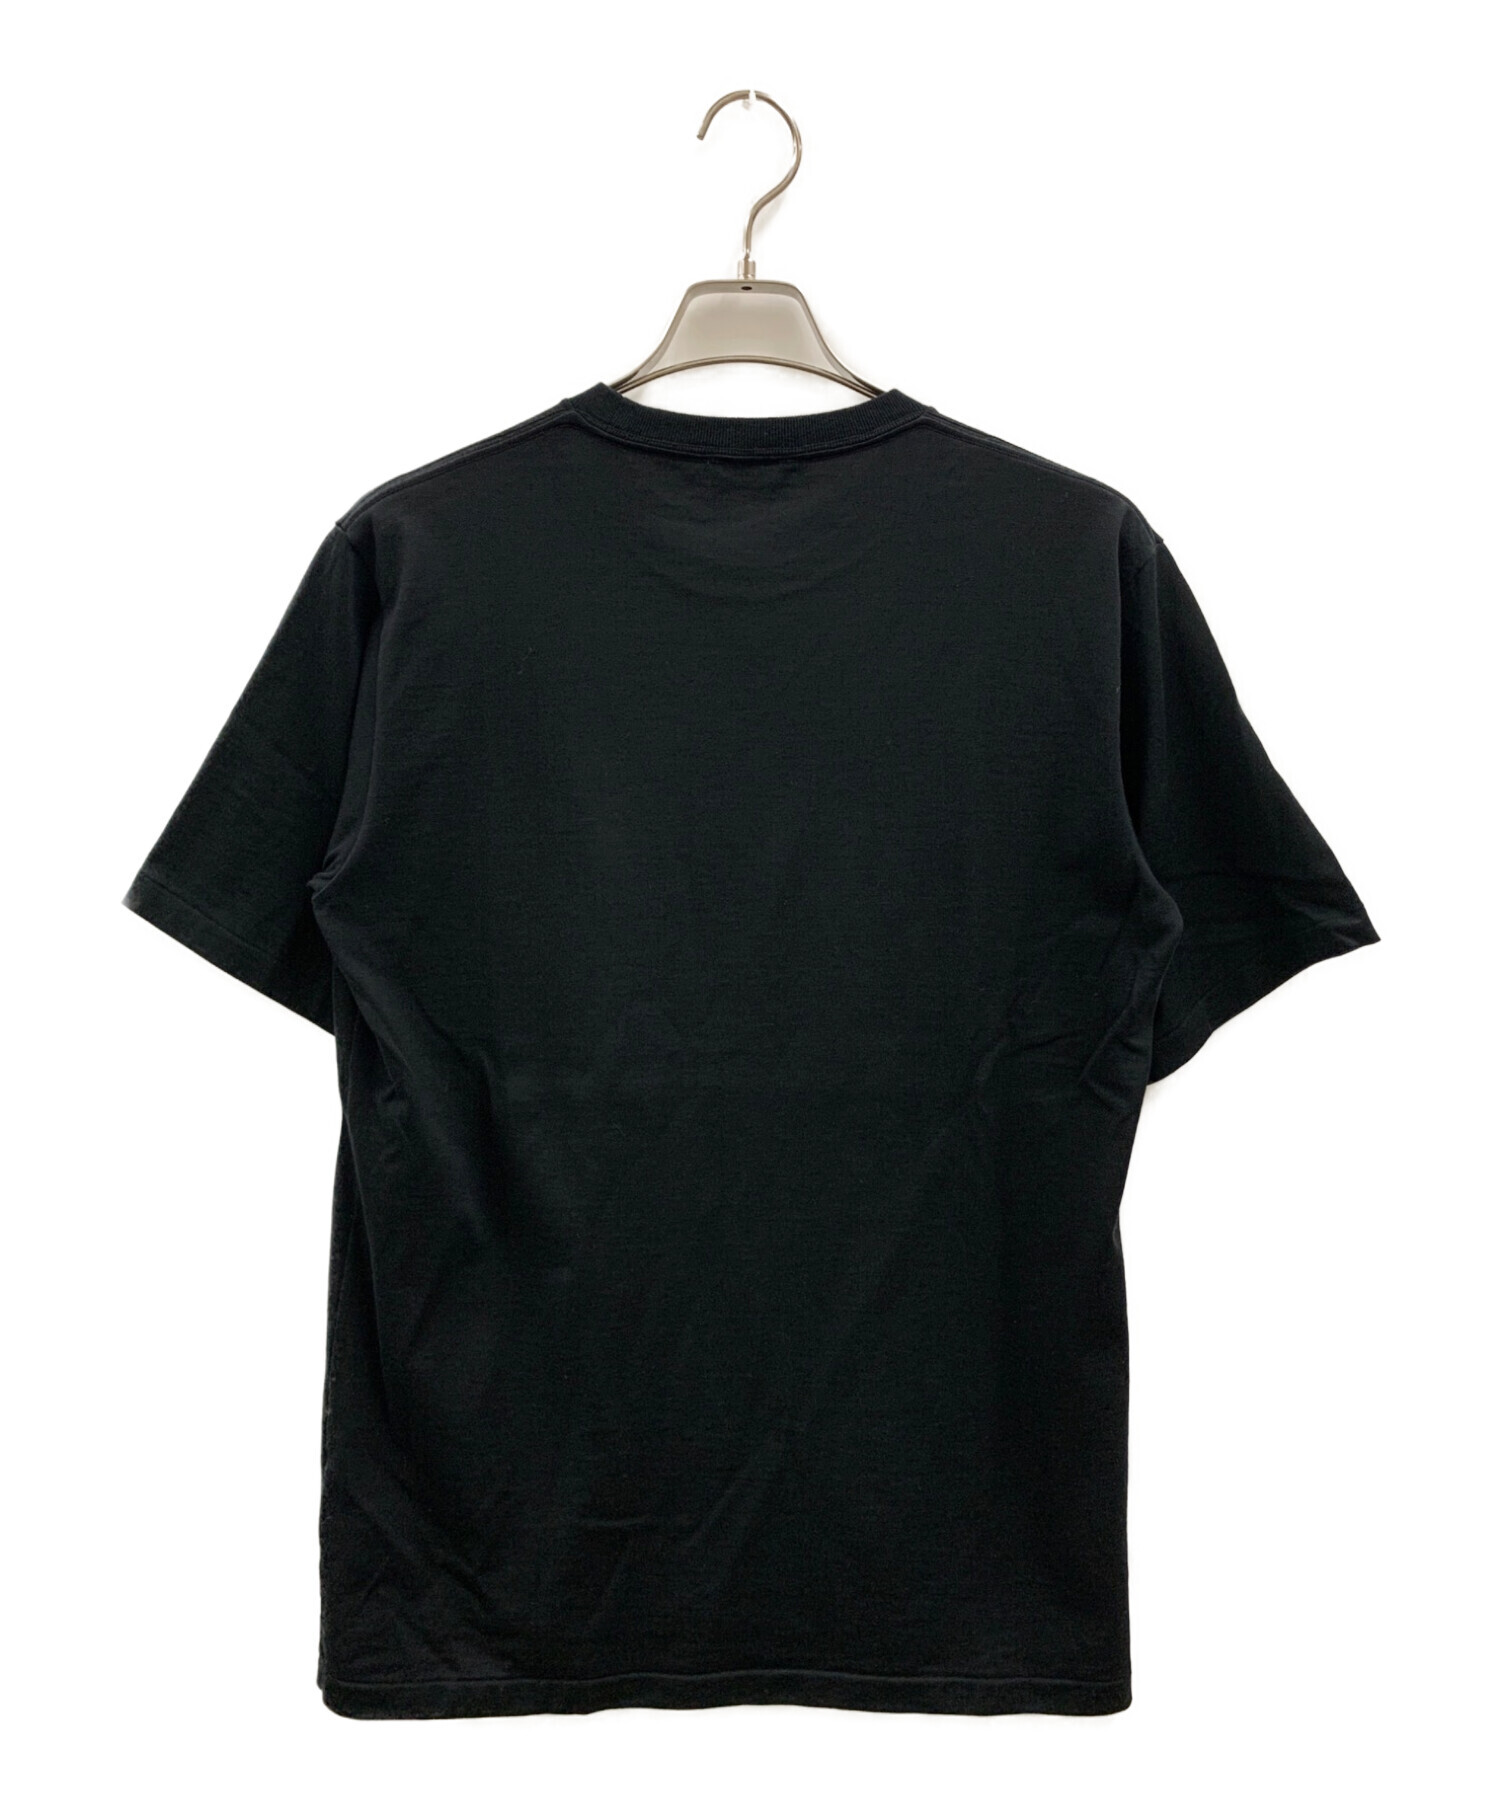 AURALEE (オーラリー) Tシャツ ブラック サイズ:S